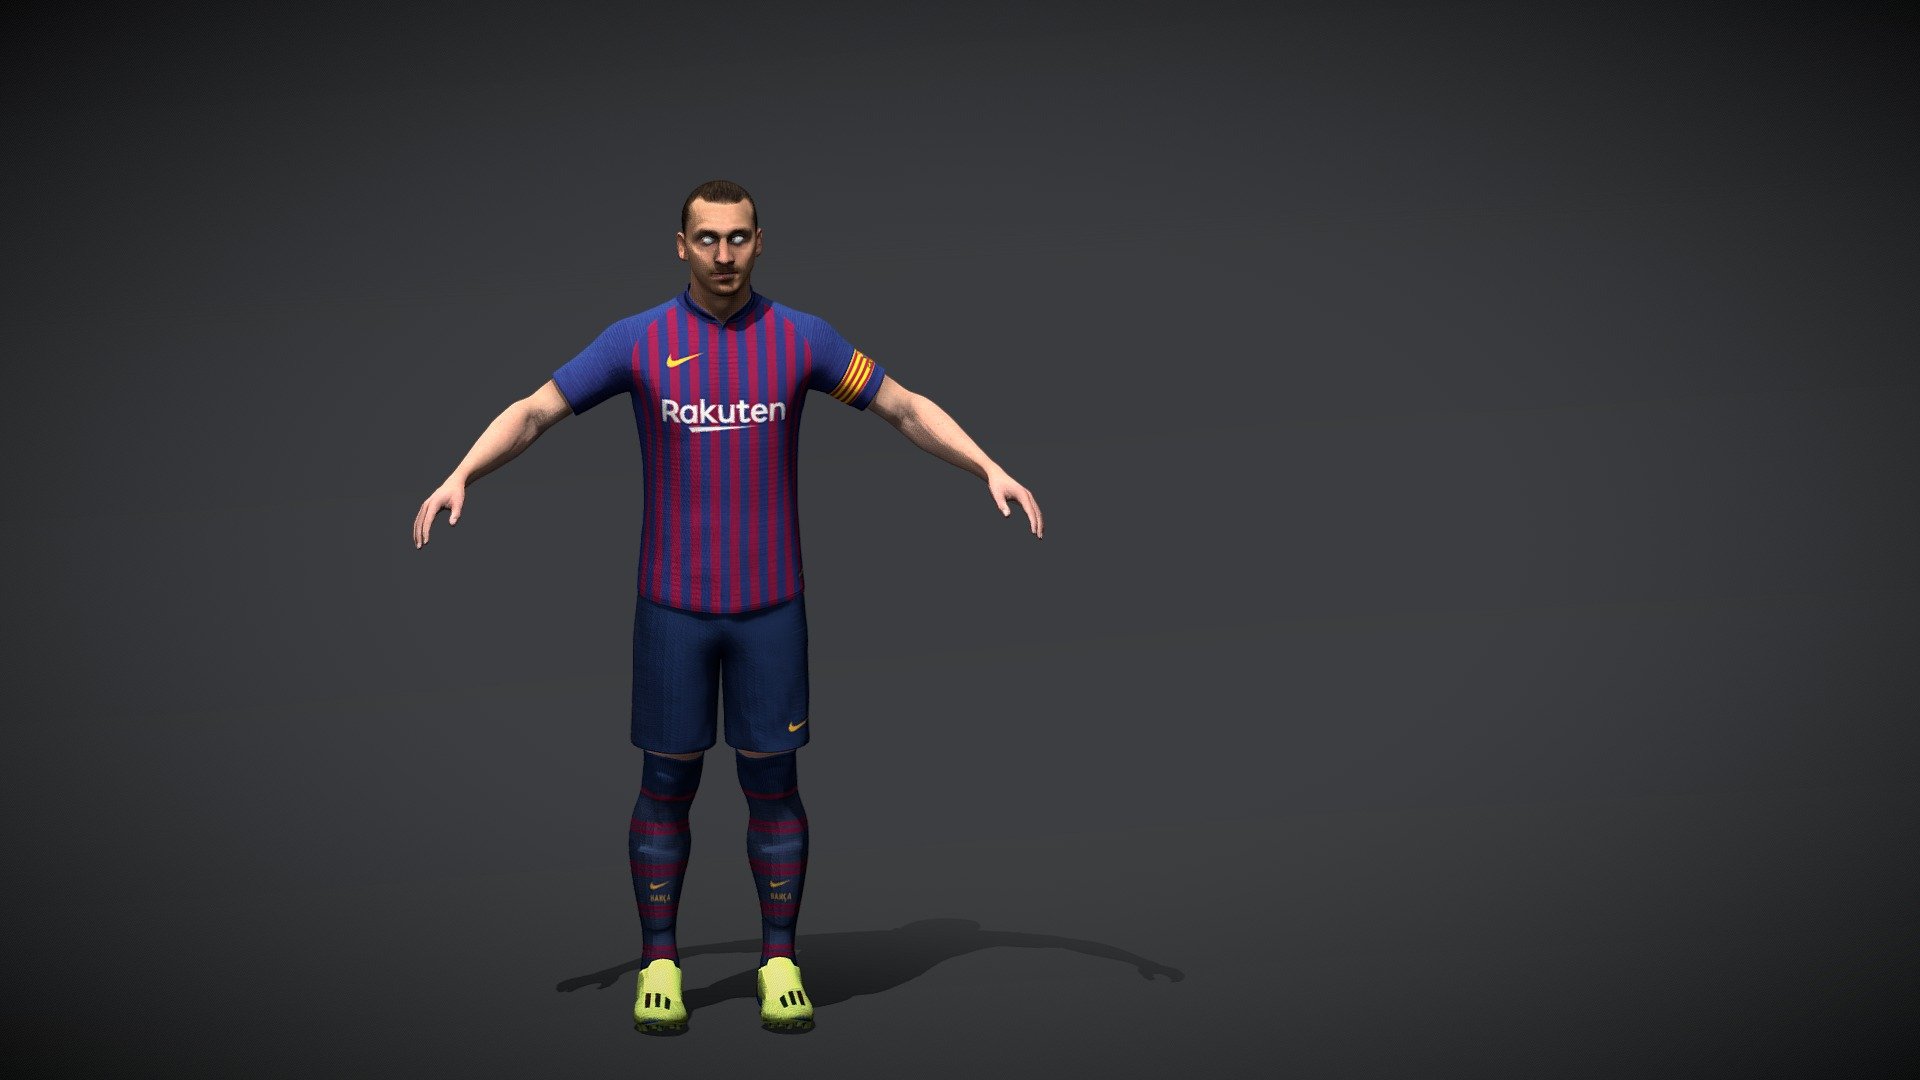 Zlatan Ibrahimovic from fifa 19 - [WIP] FIFA 19 model - 3D model by kraitzk 3d model